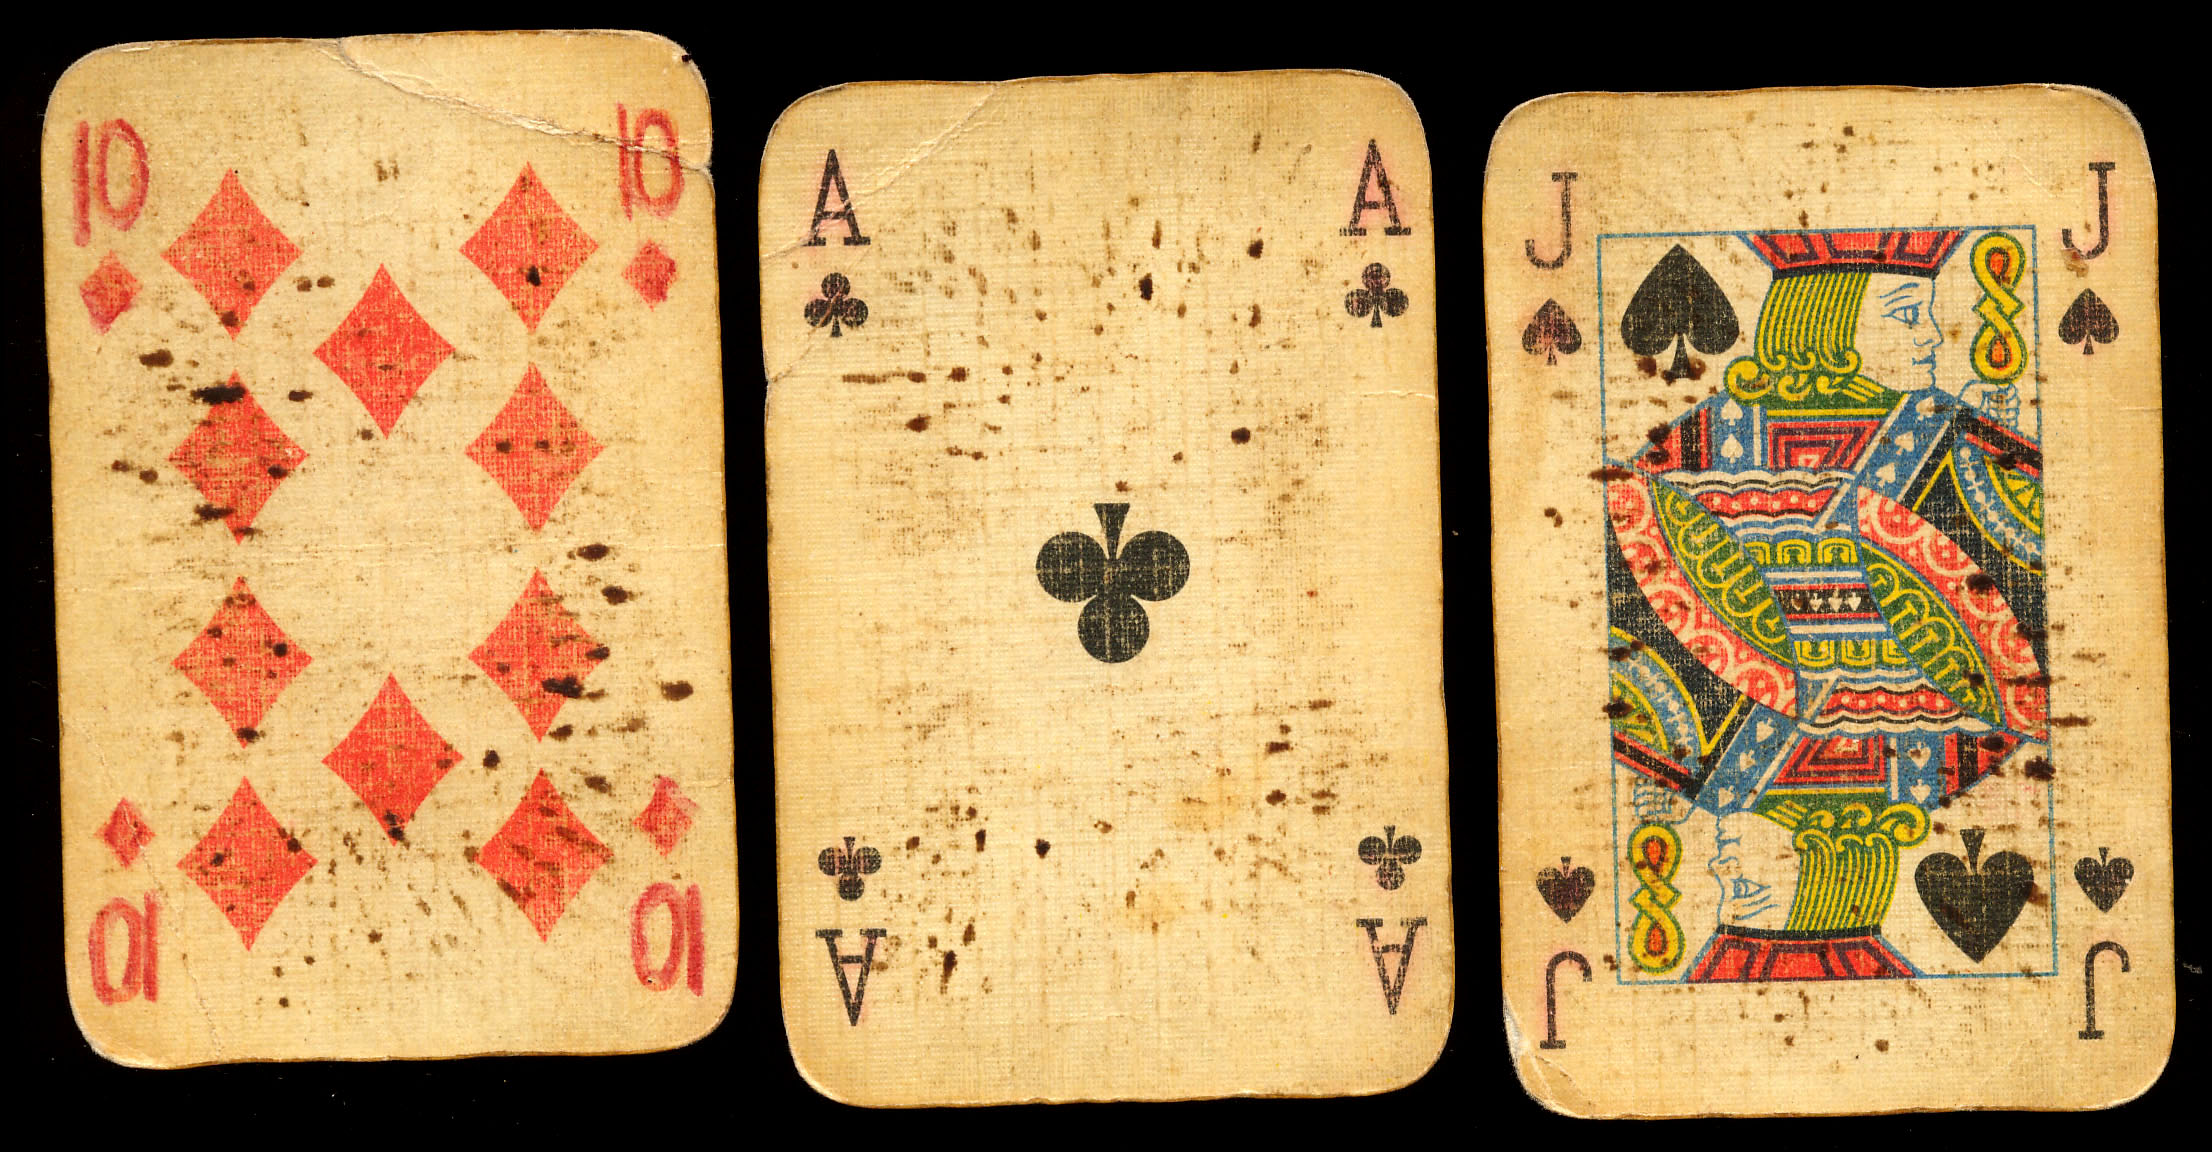 temabina cards playcards deck ace diamonds spades clubs joker casino gambling paper texture dirty